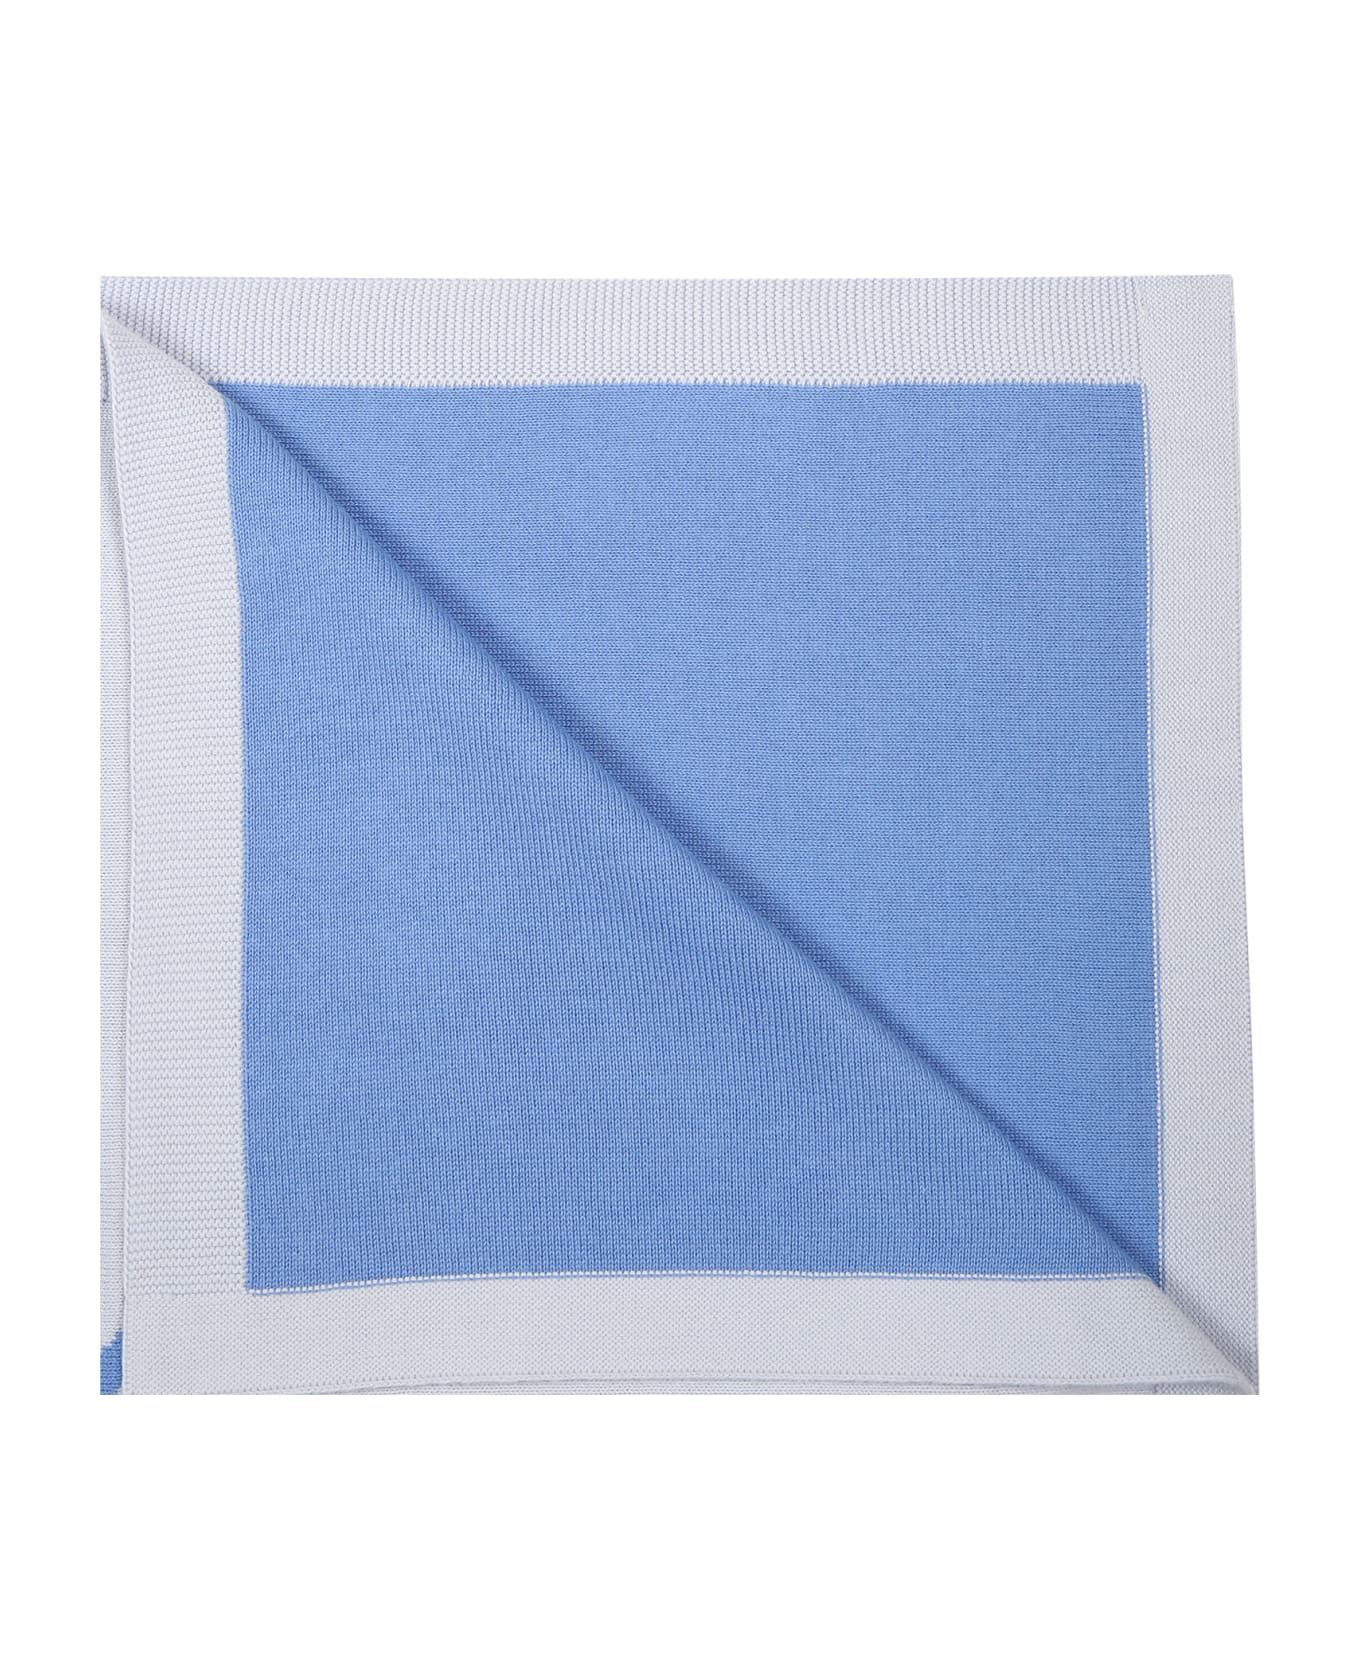 Kenzo Kids Light Blue Blanket For Babies With Logo - Light Blue